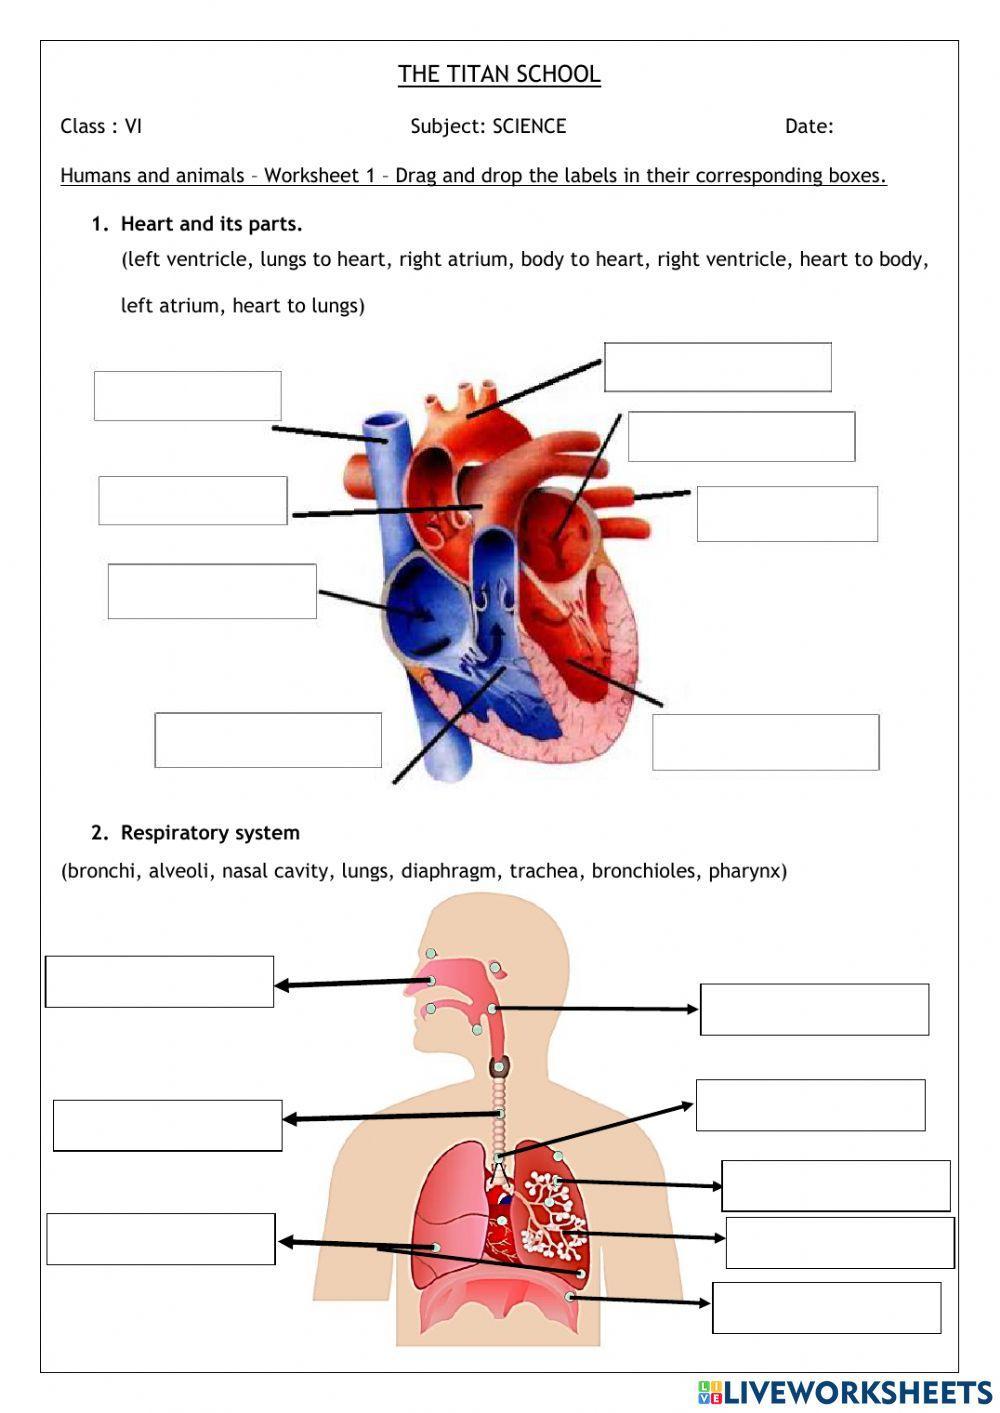 Human organs - label